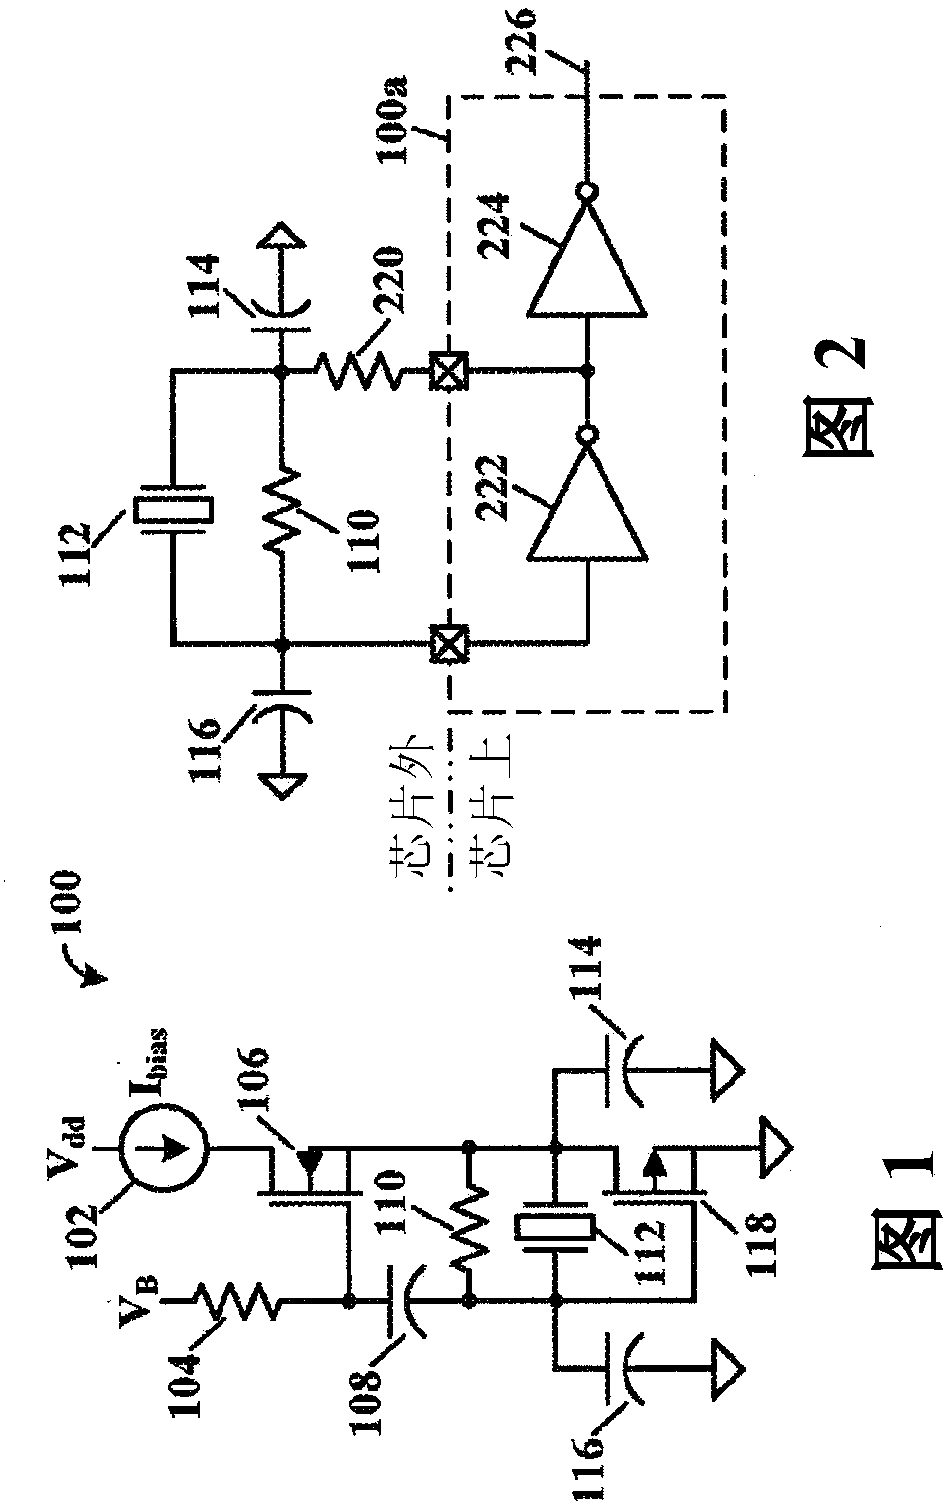 Ultra-low power crystal oscillator with adaptive self-start